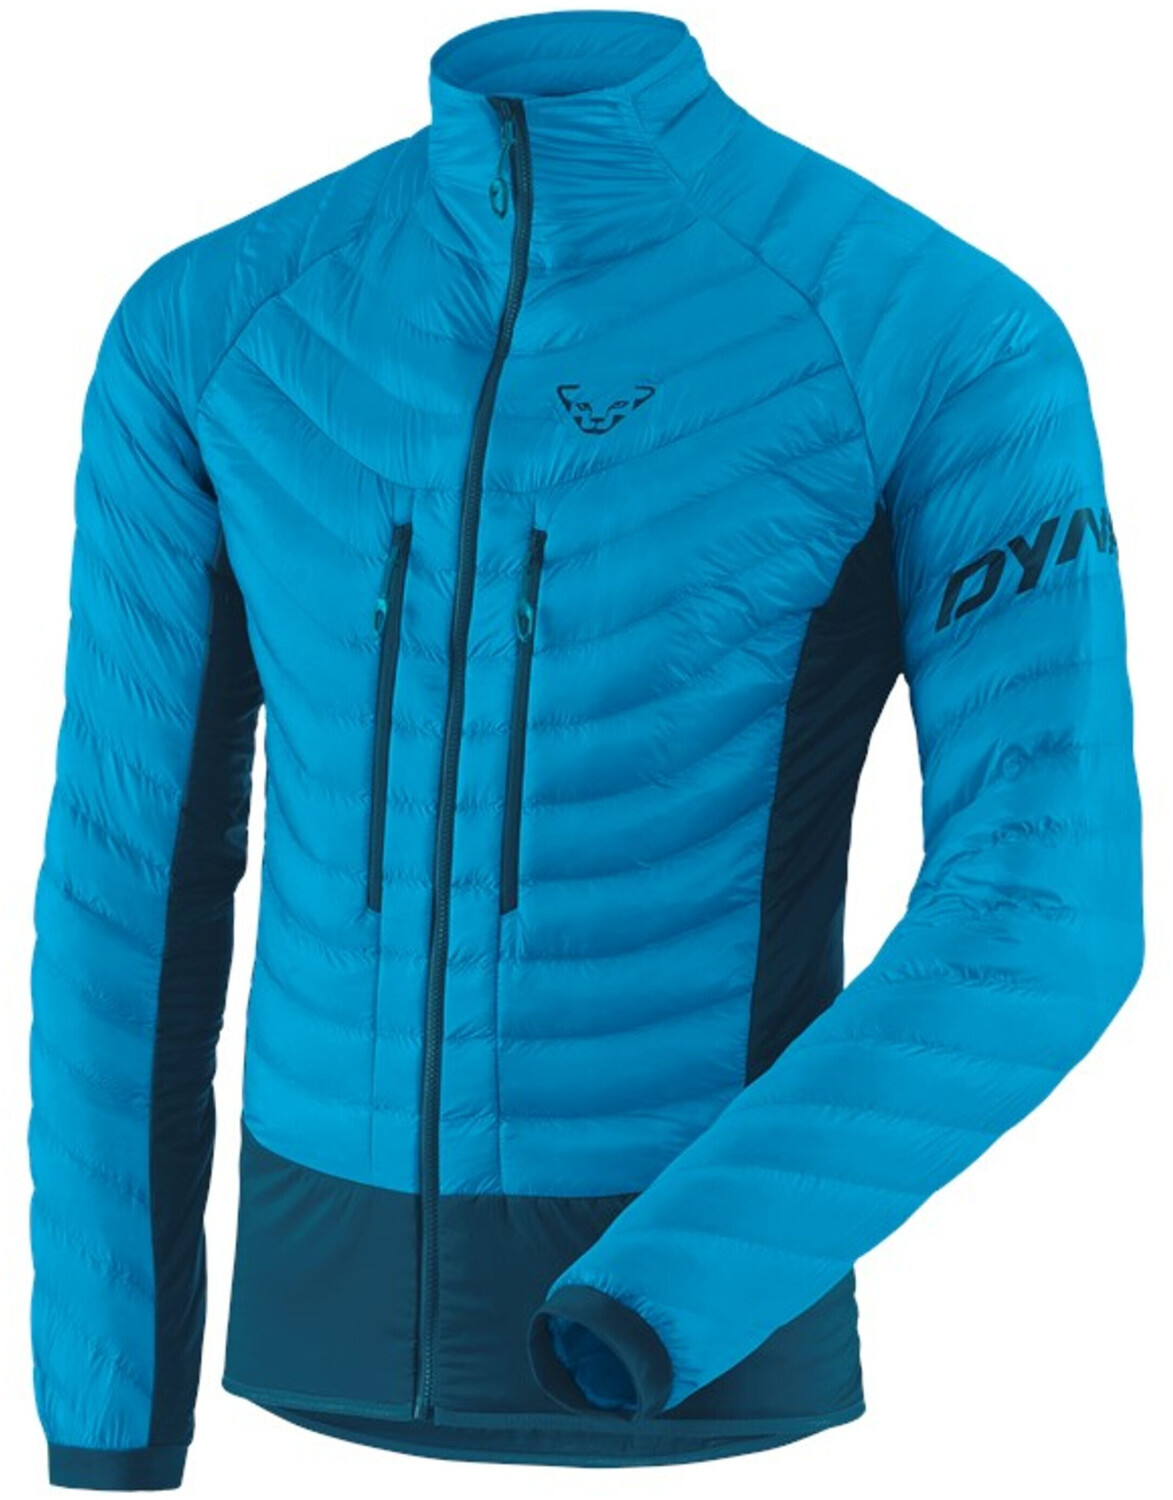 Dynafit TLT Light Insulation Jacket Men blue frost